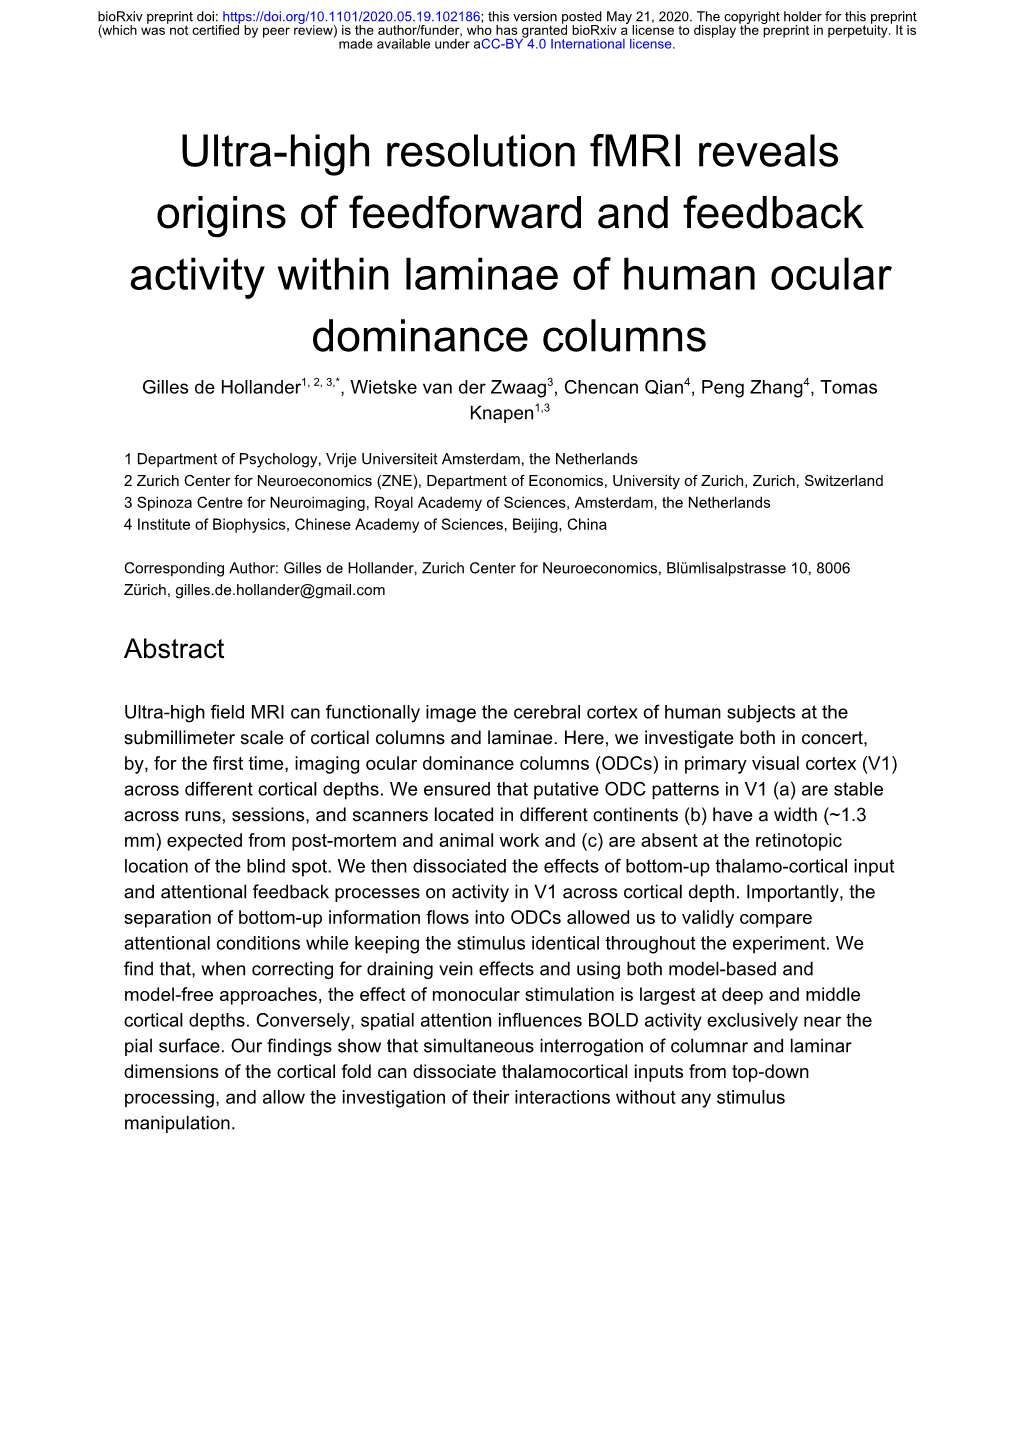 Ultra-High Resolution Fmri Reveals Origins of Feedforward and Feedback Activity Within Laminae of Human Ocular Dominance Columns